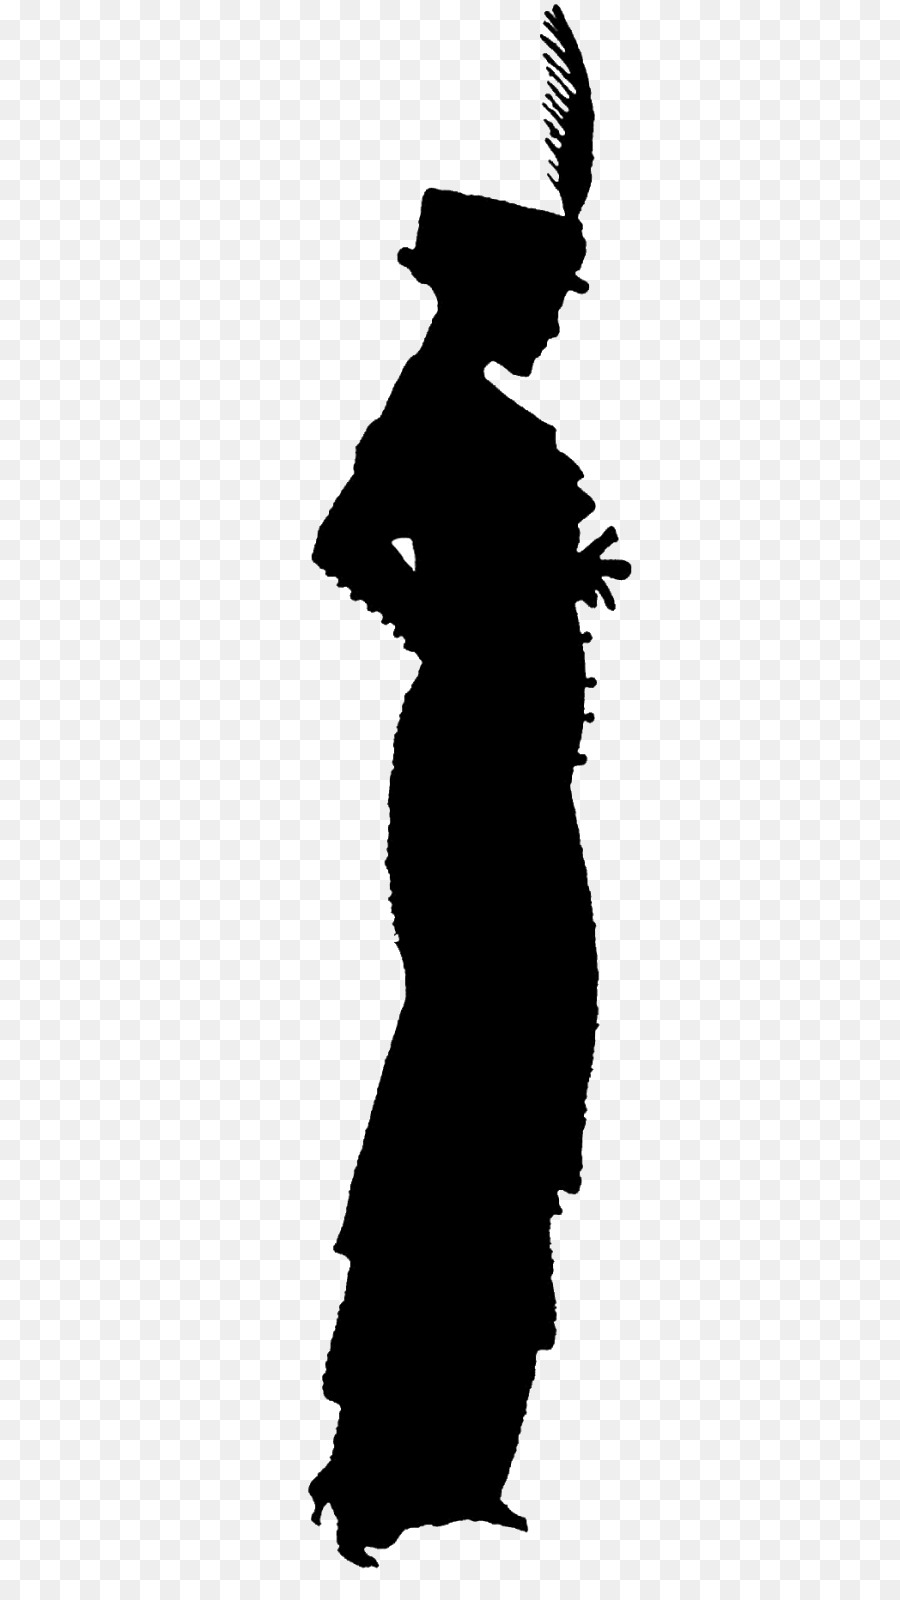 Silhouette Stencil Woman Art Clip art - Woman Sillouette png download - 376*1600 - Free Transparent Silhouette png Download.